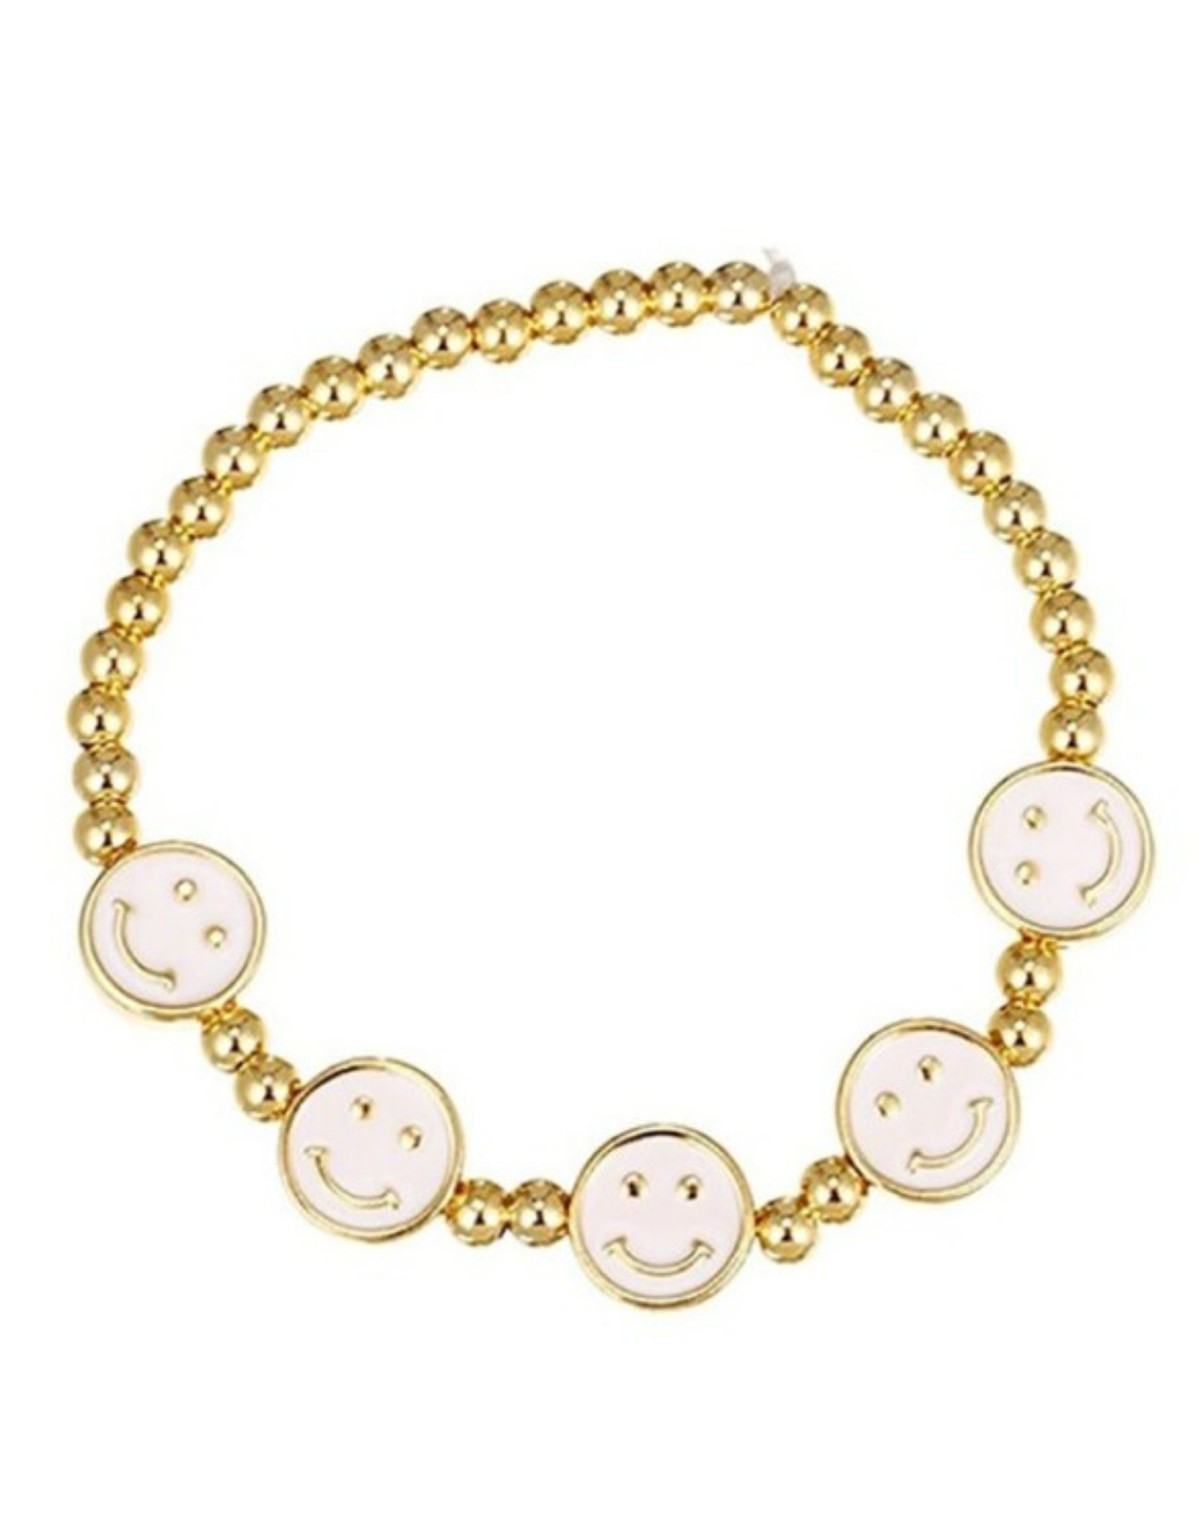 Smiles Bracelet - White item